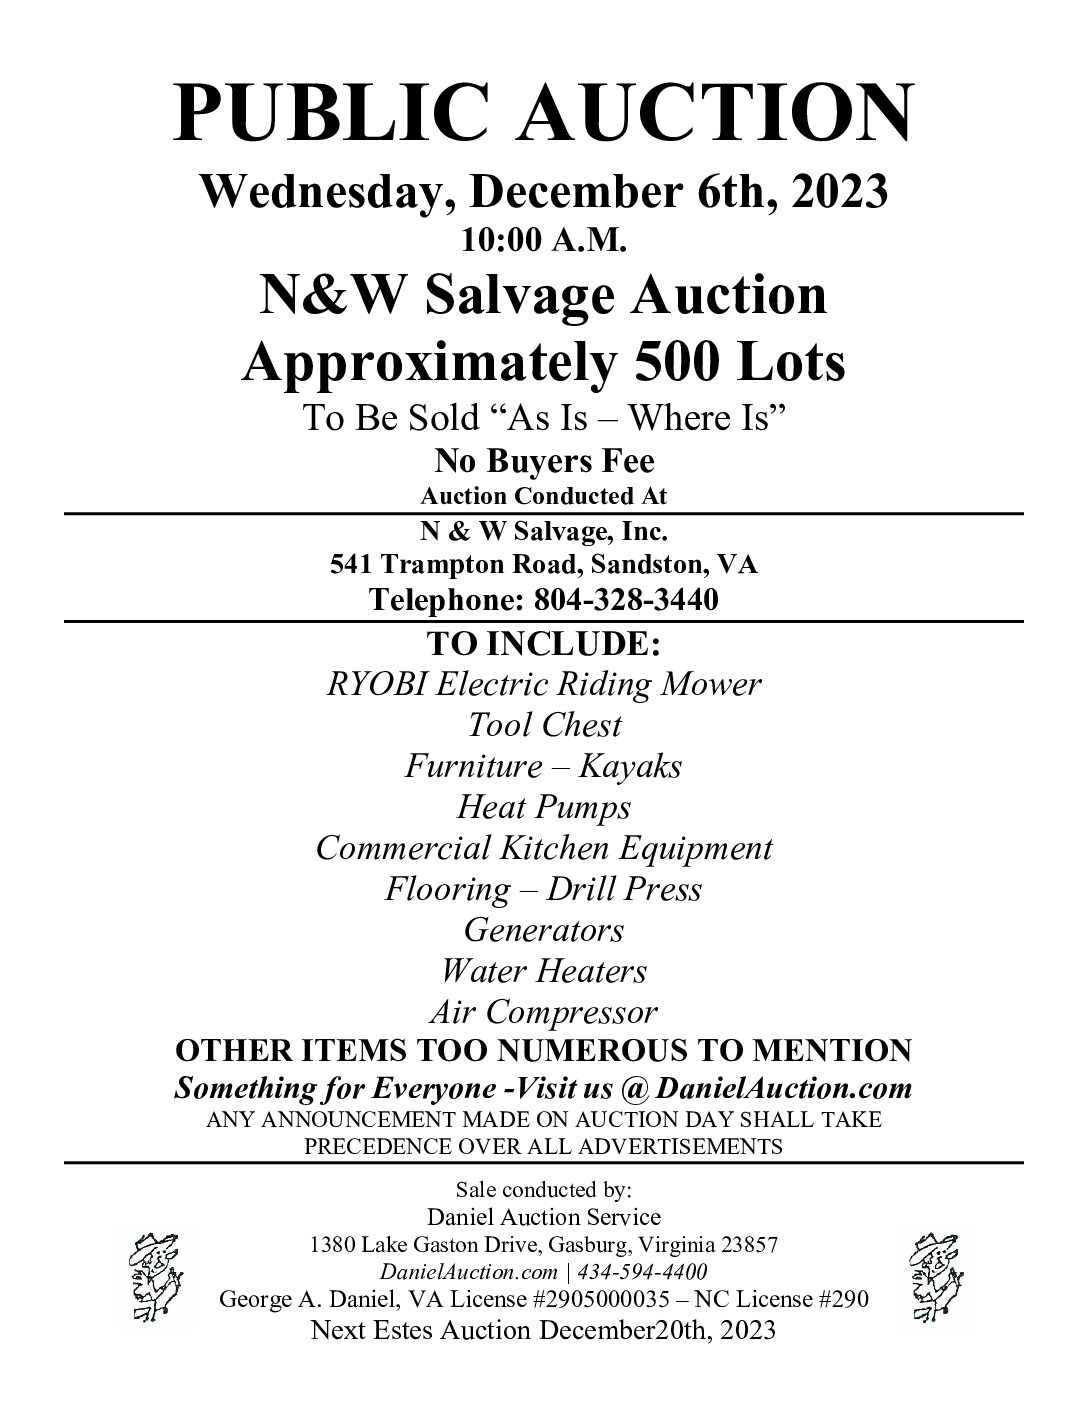 Wed. December 6, 2023 | N&W Salvage Auction